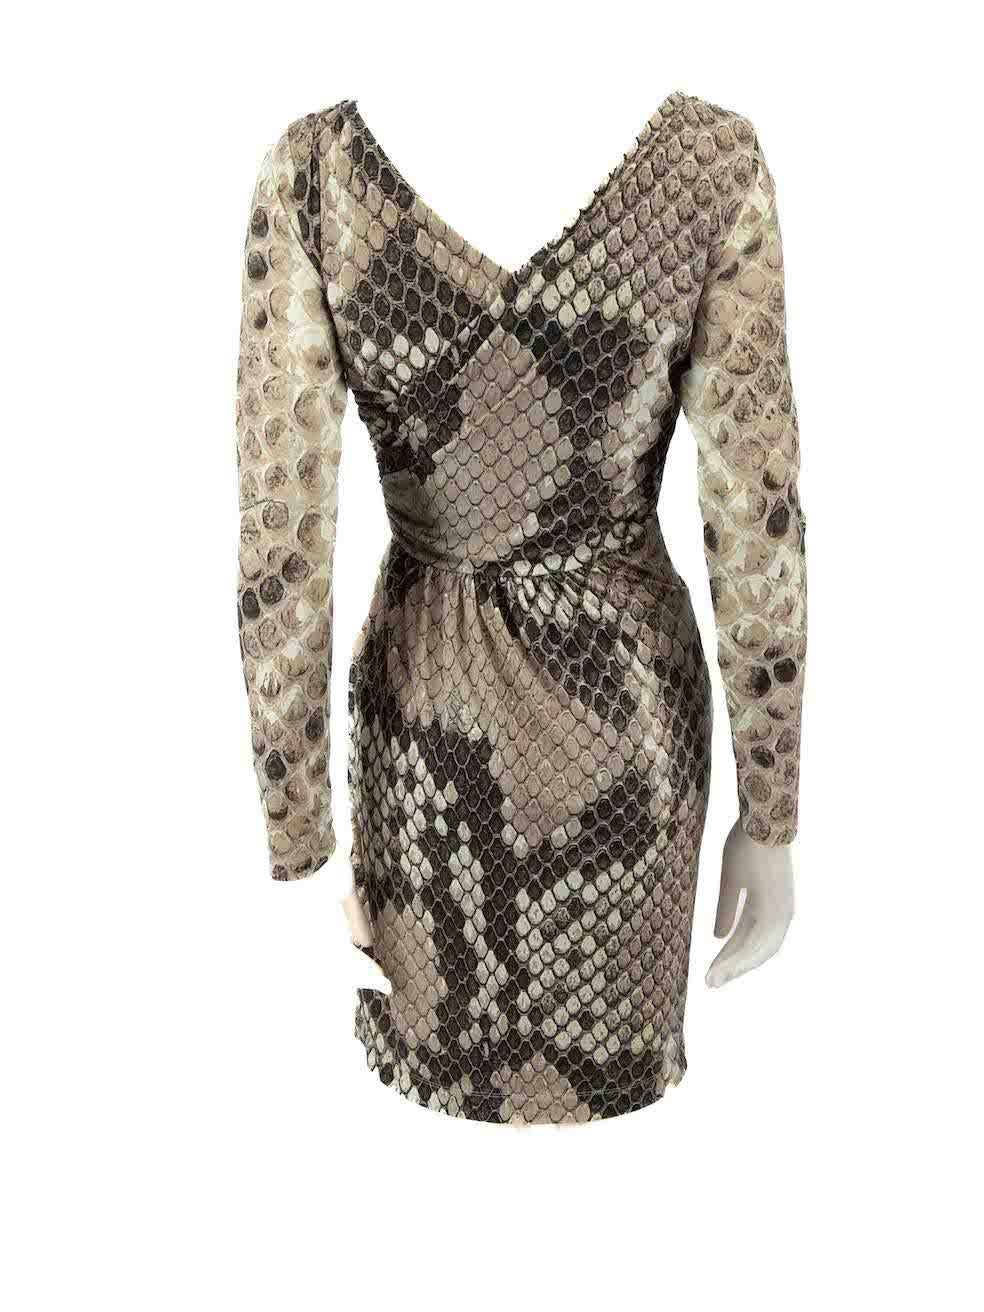 Roberto Cavalli Beige Python Print Mini Dress Size S In New Condition For Sale In London, GB